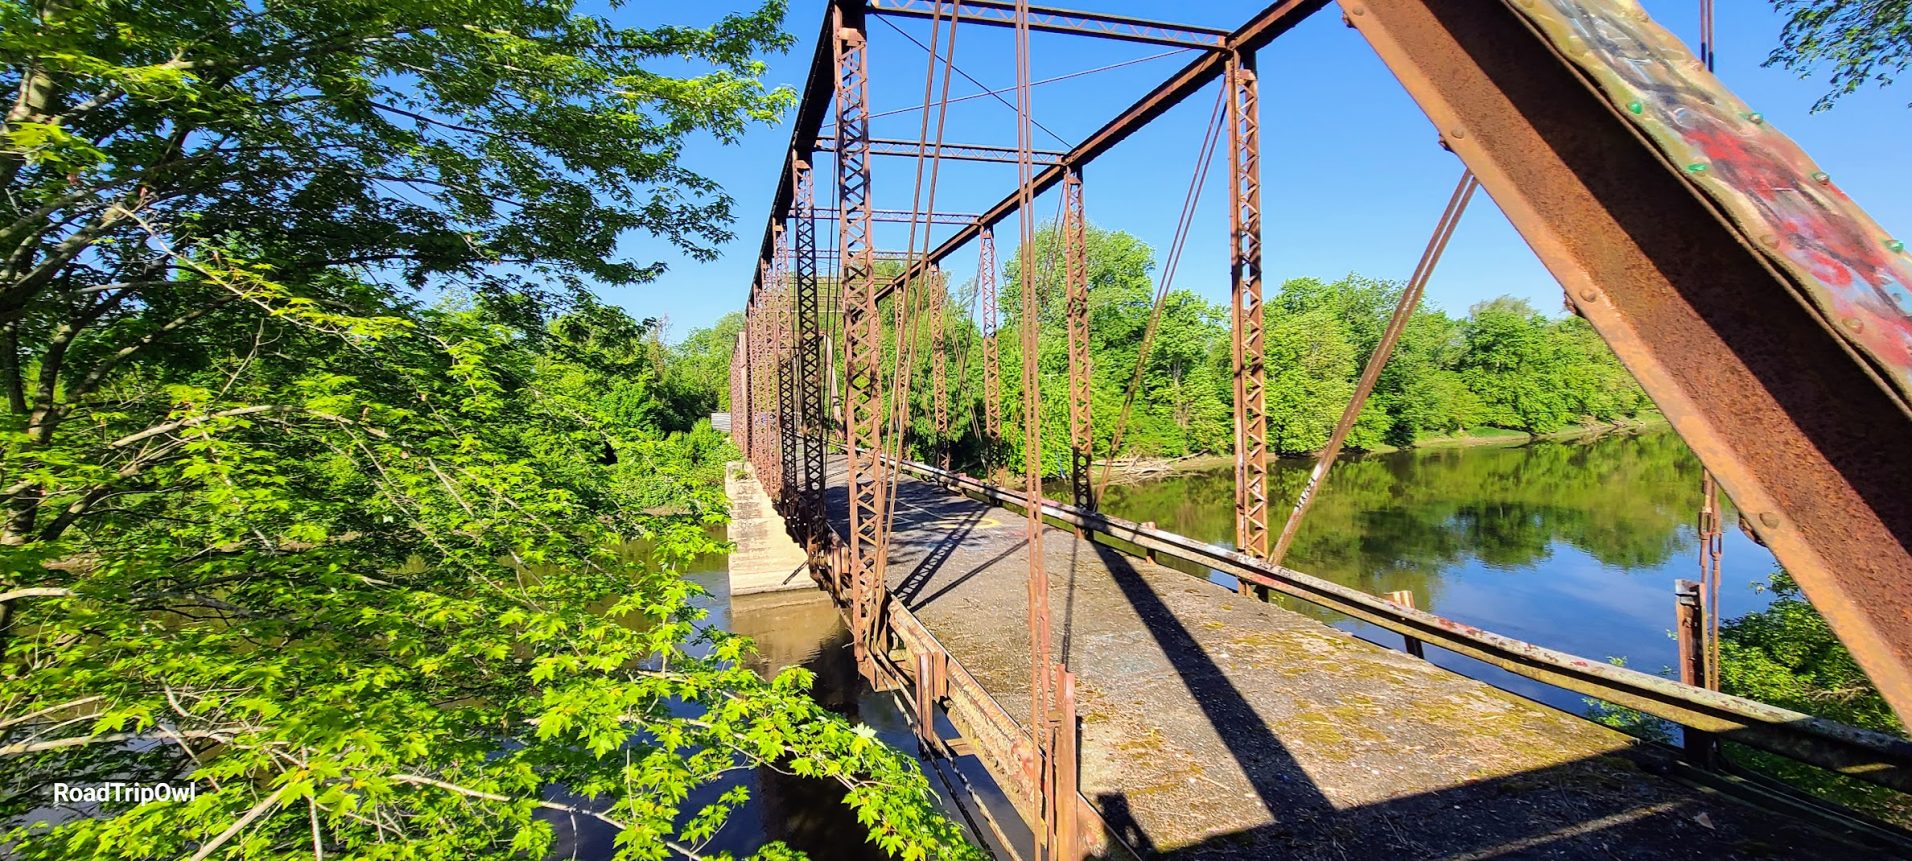 Historical landmark, Bailey bridge also known as Smith bridge in Midland, Michigan.